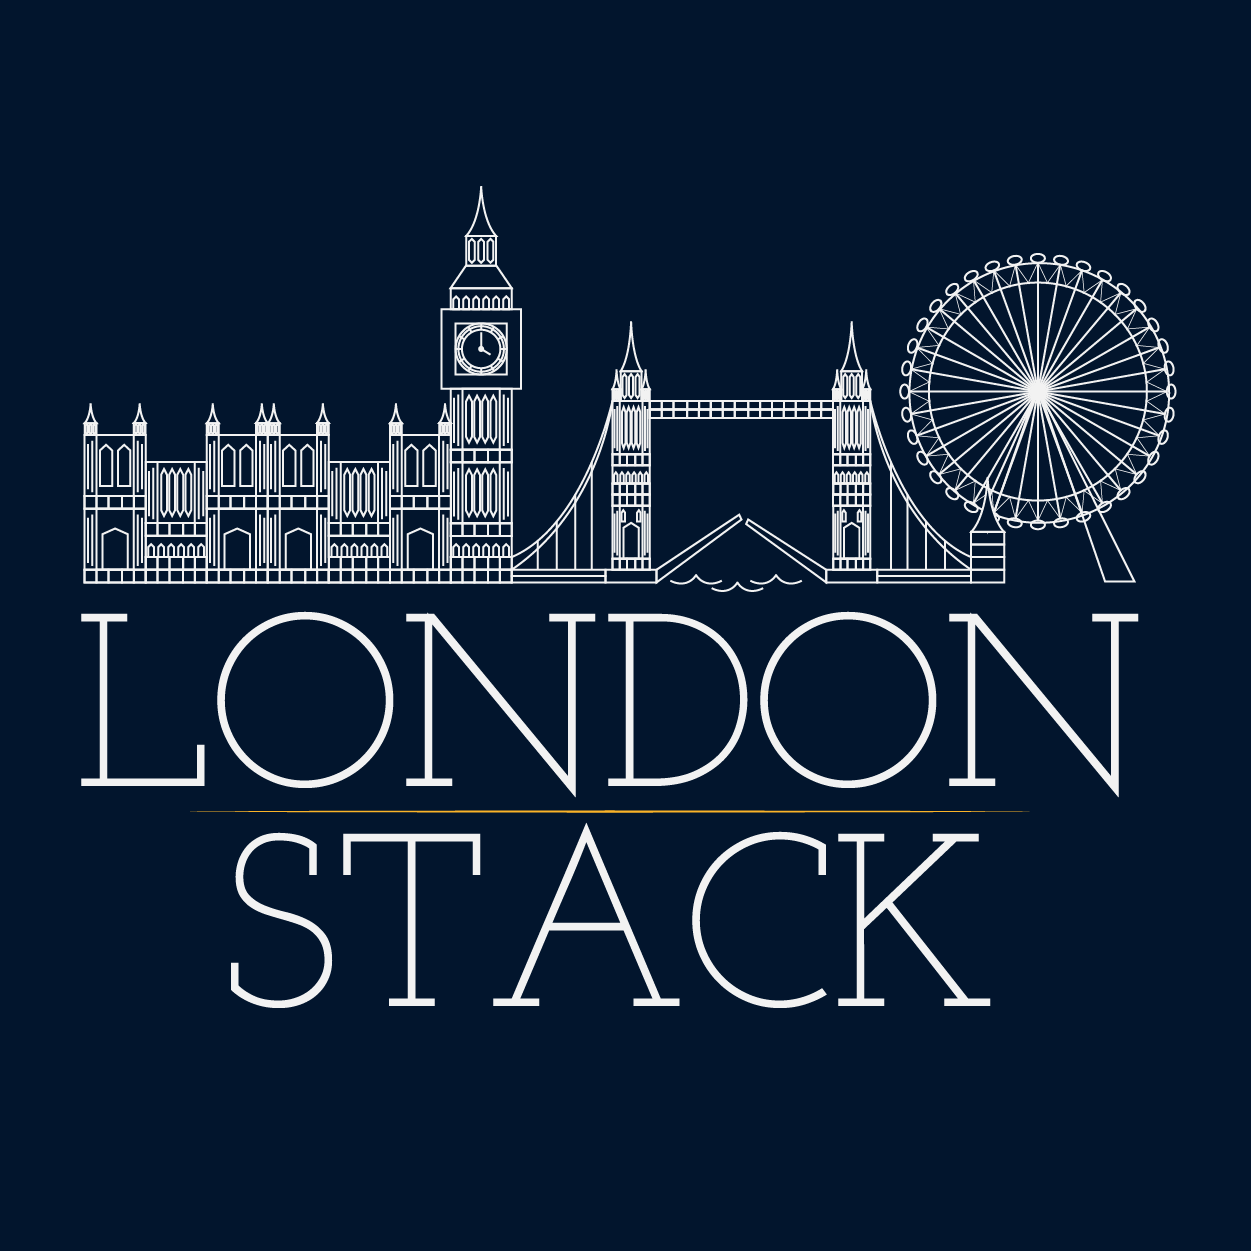 London Stack